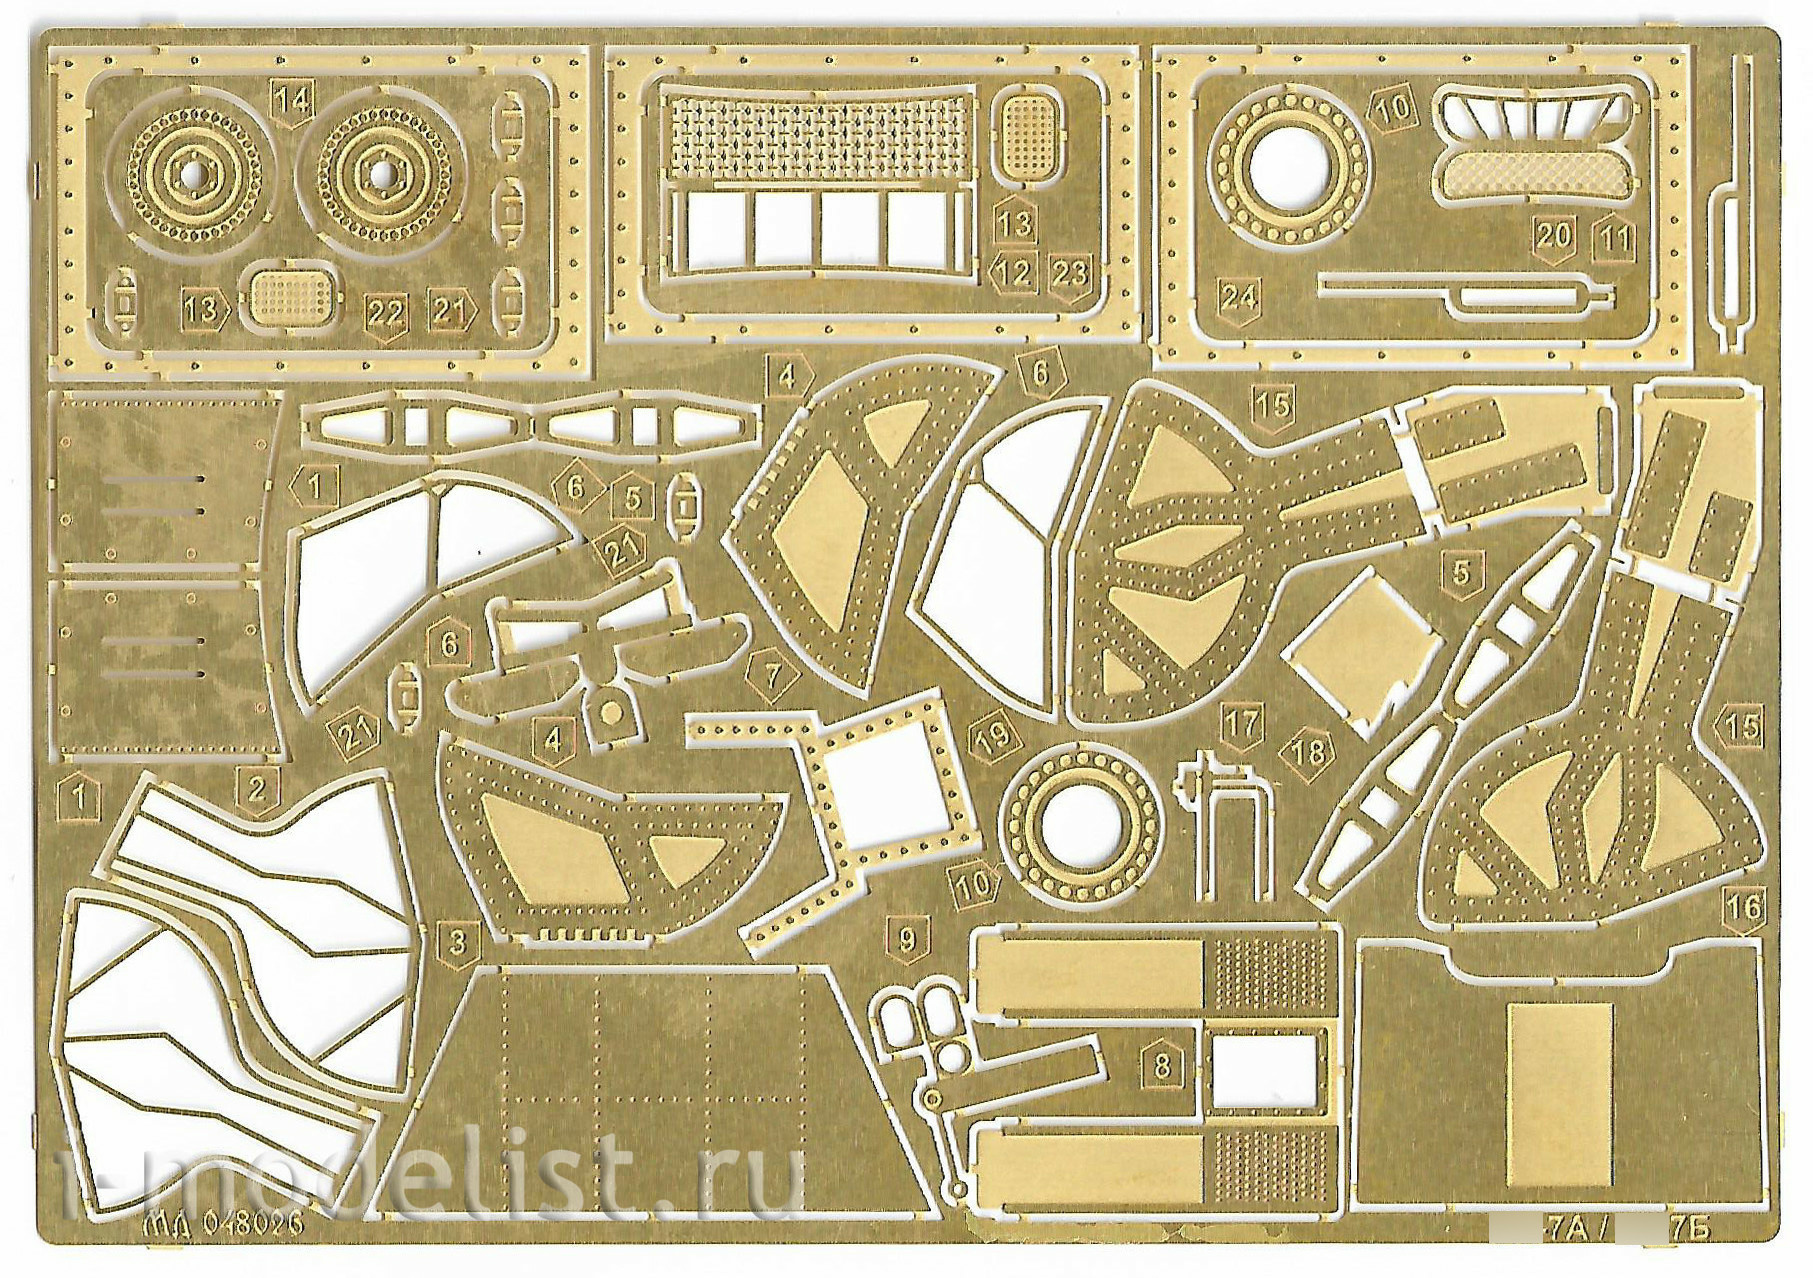 048026 Microdesign 1/48 Yak-7 (ARK) color dashboards